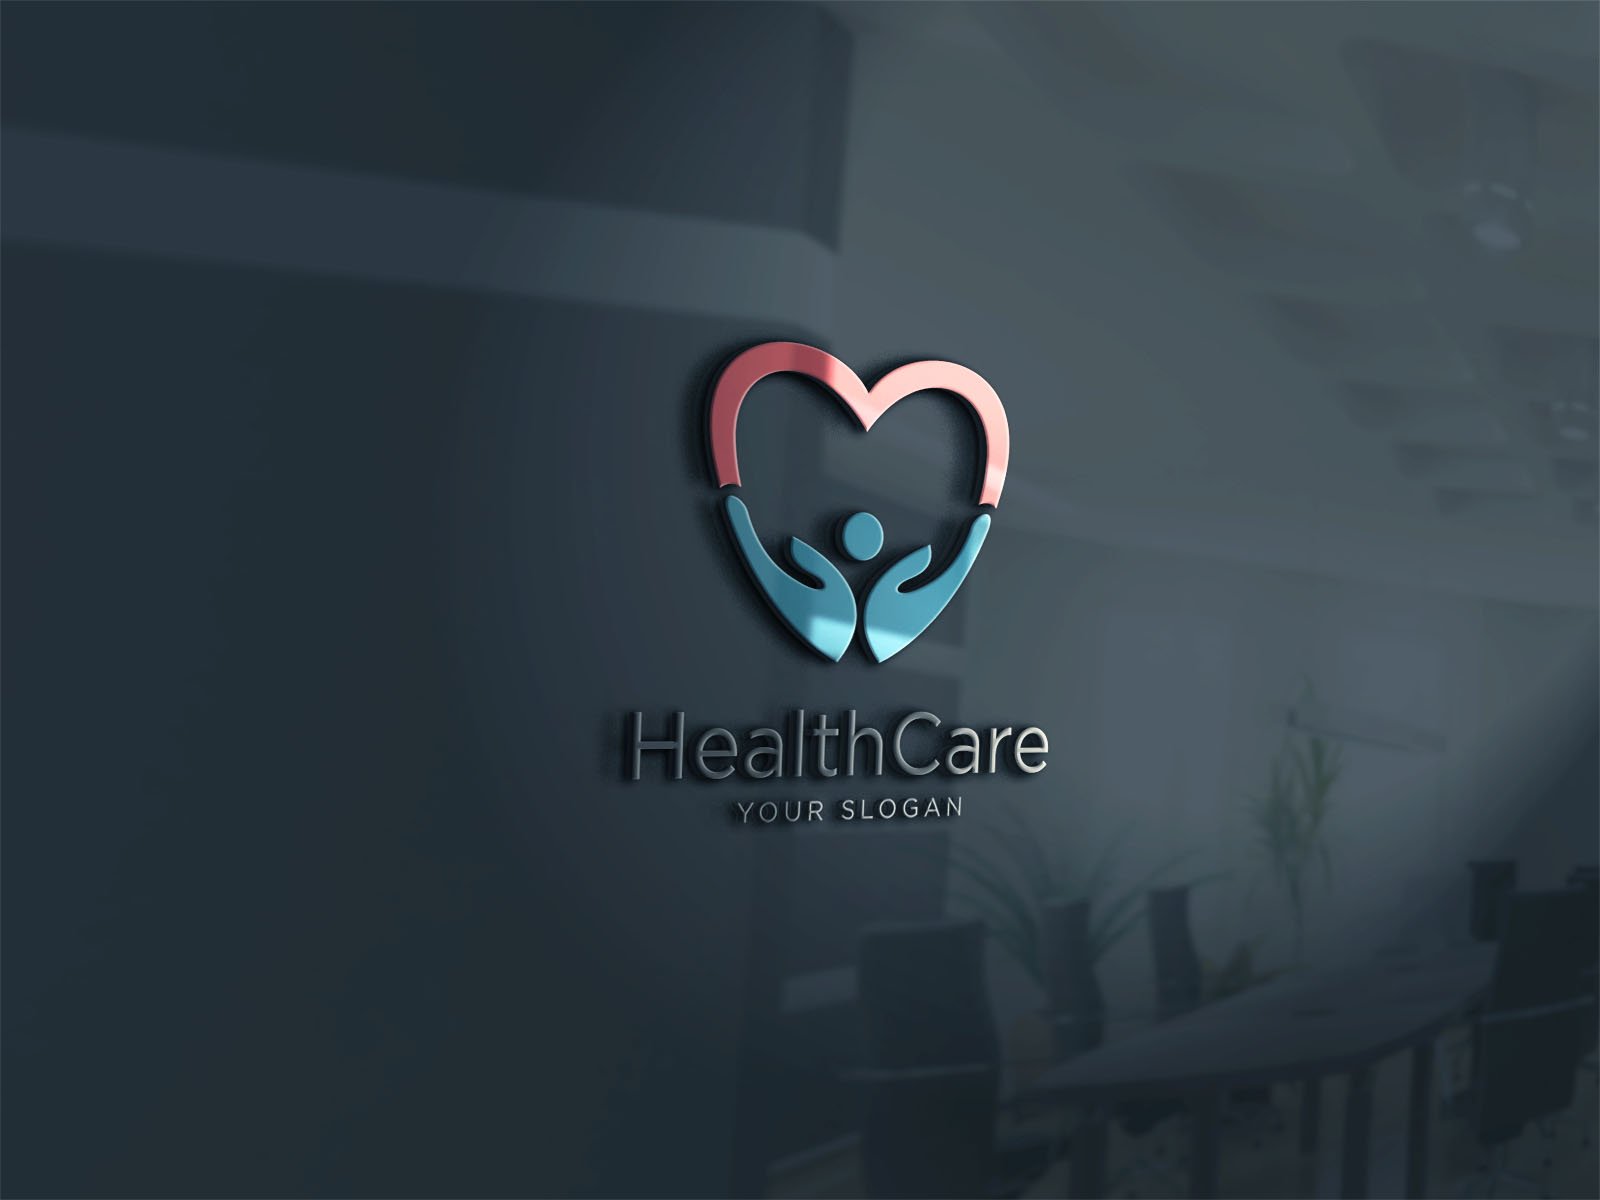 Health Care Logo cover image.